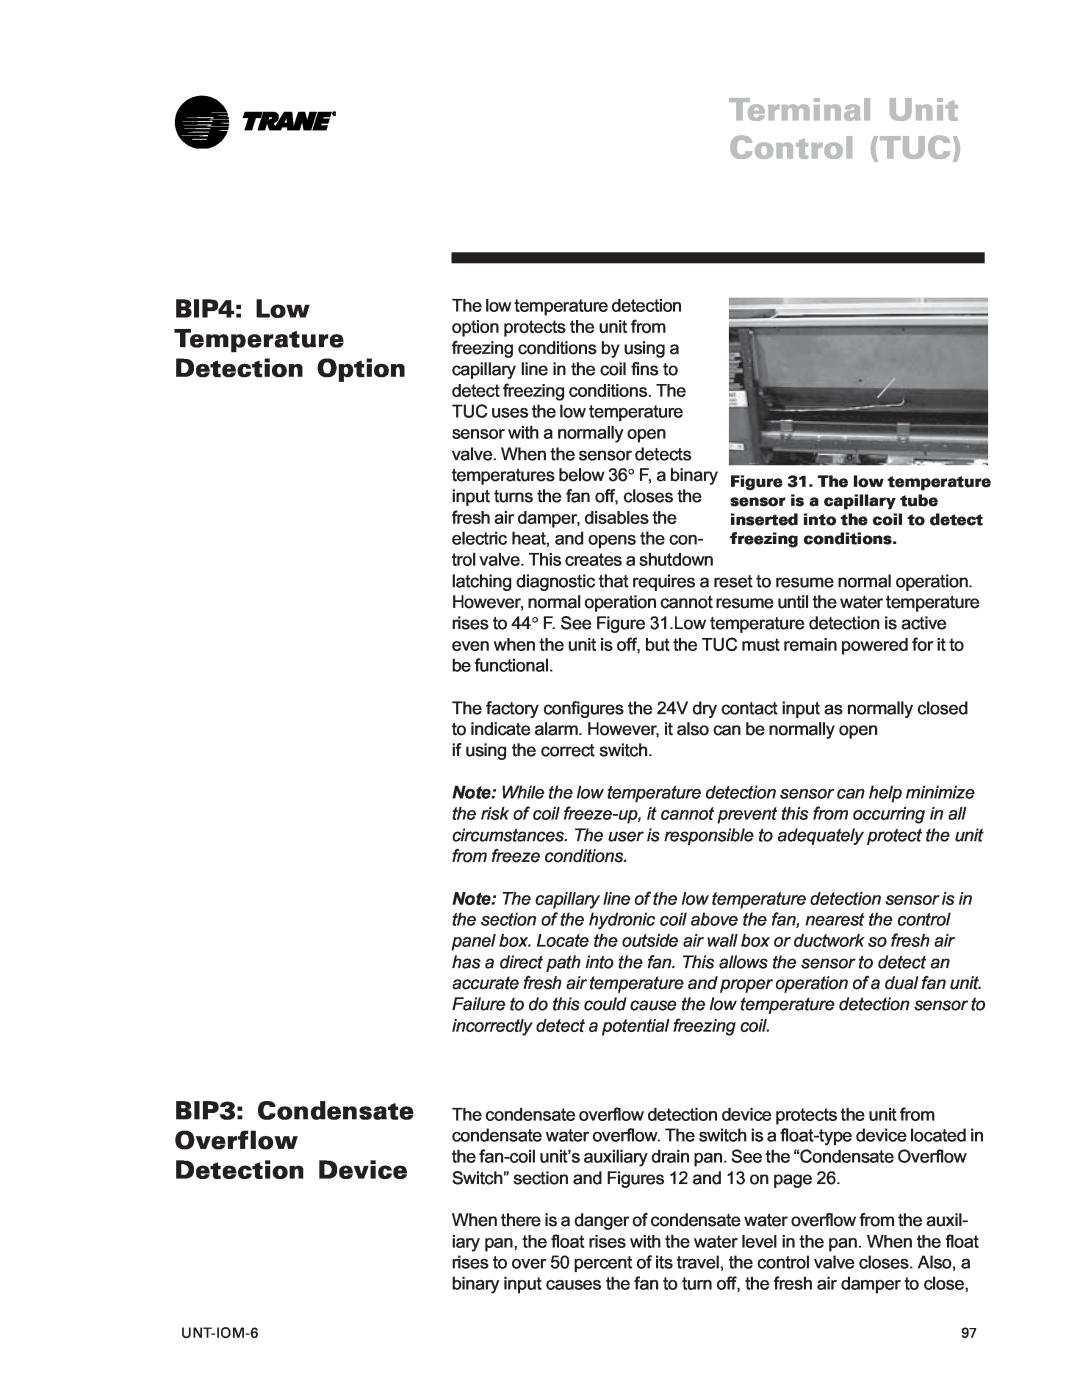 Trane LO manual BIP4 Low Temperature Detection Option, BIP3: Condensate Overflow Detection Device, UNT-IOM-6 